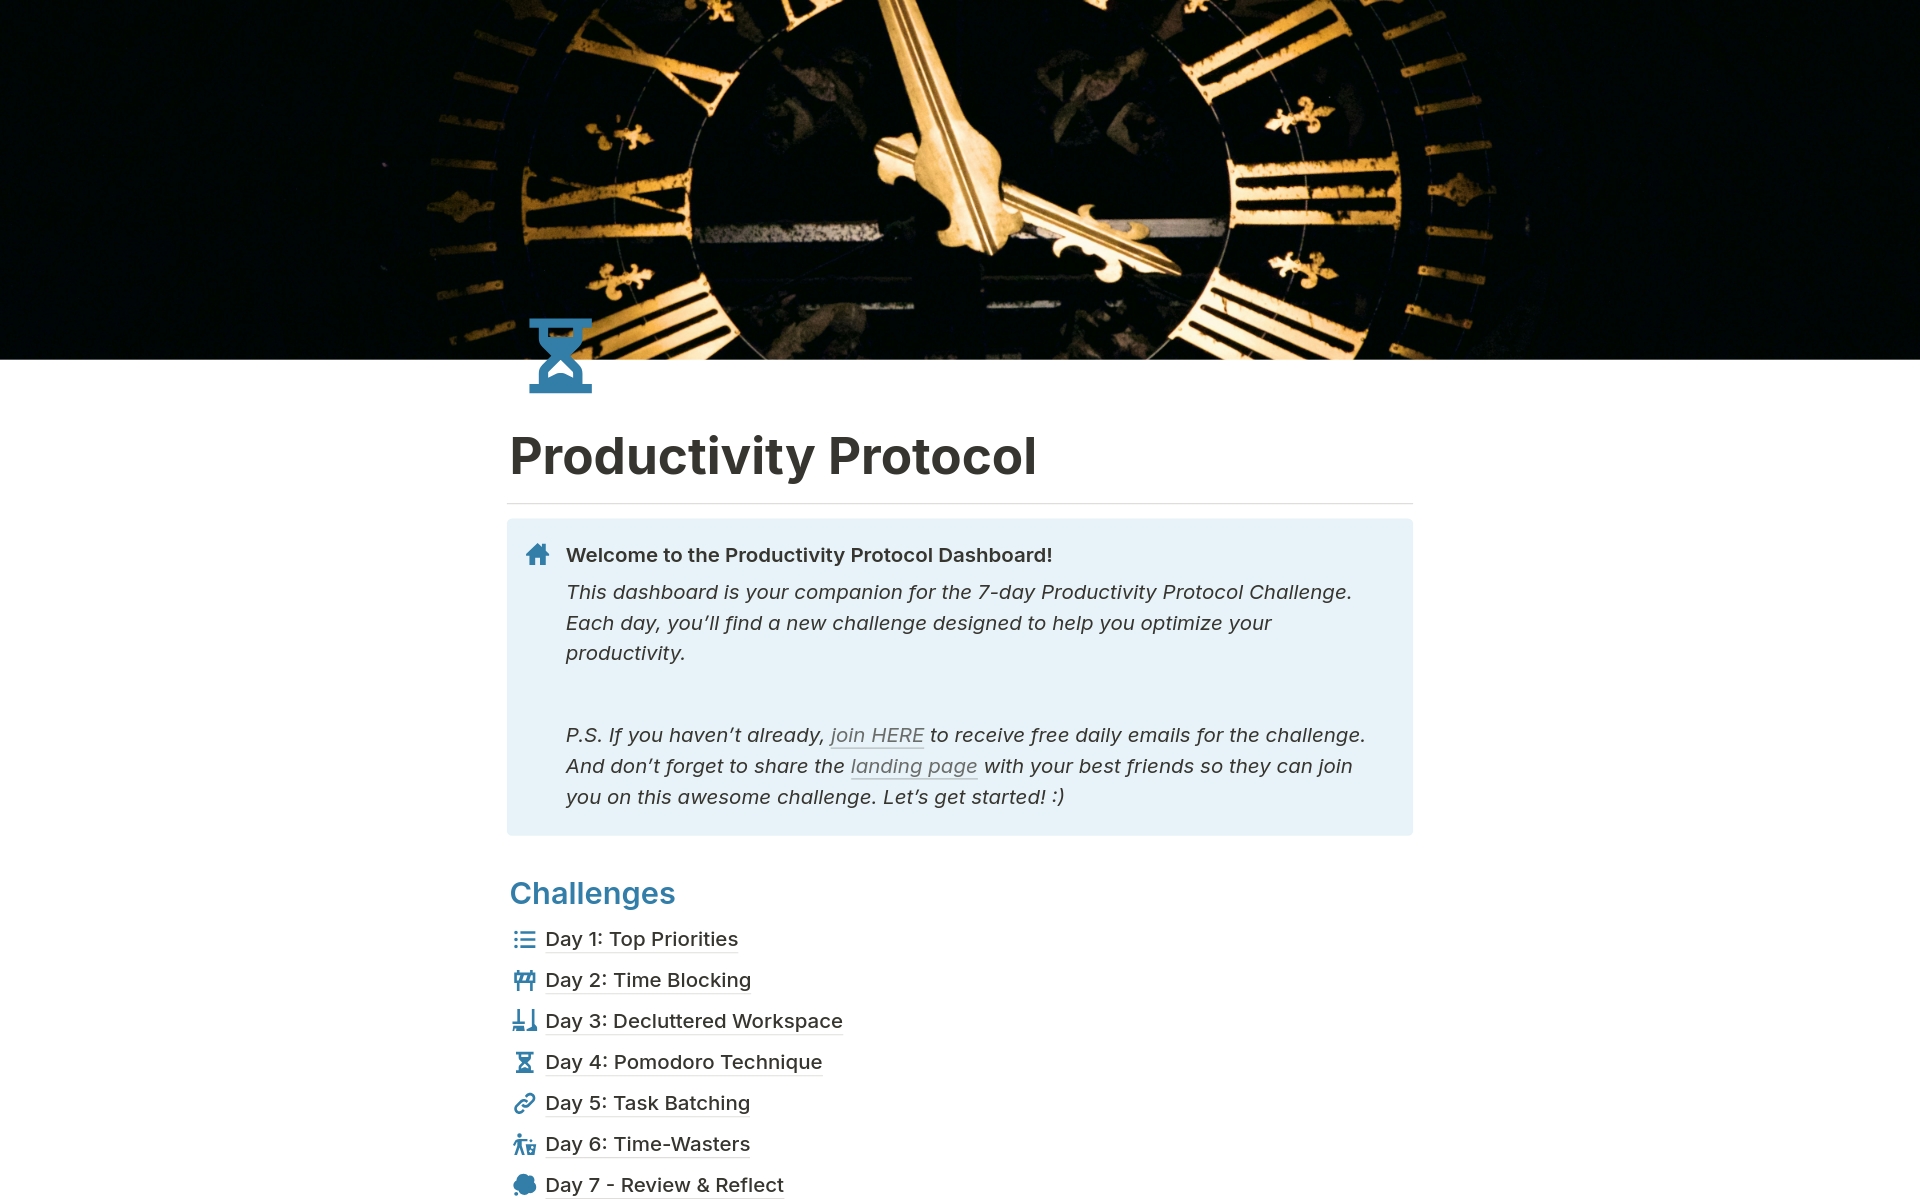 7-Day “Productivity Protocol” Challenge님의 템플릿 미리보기